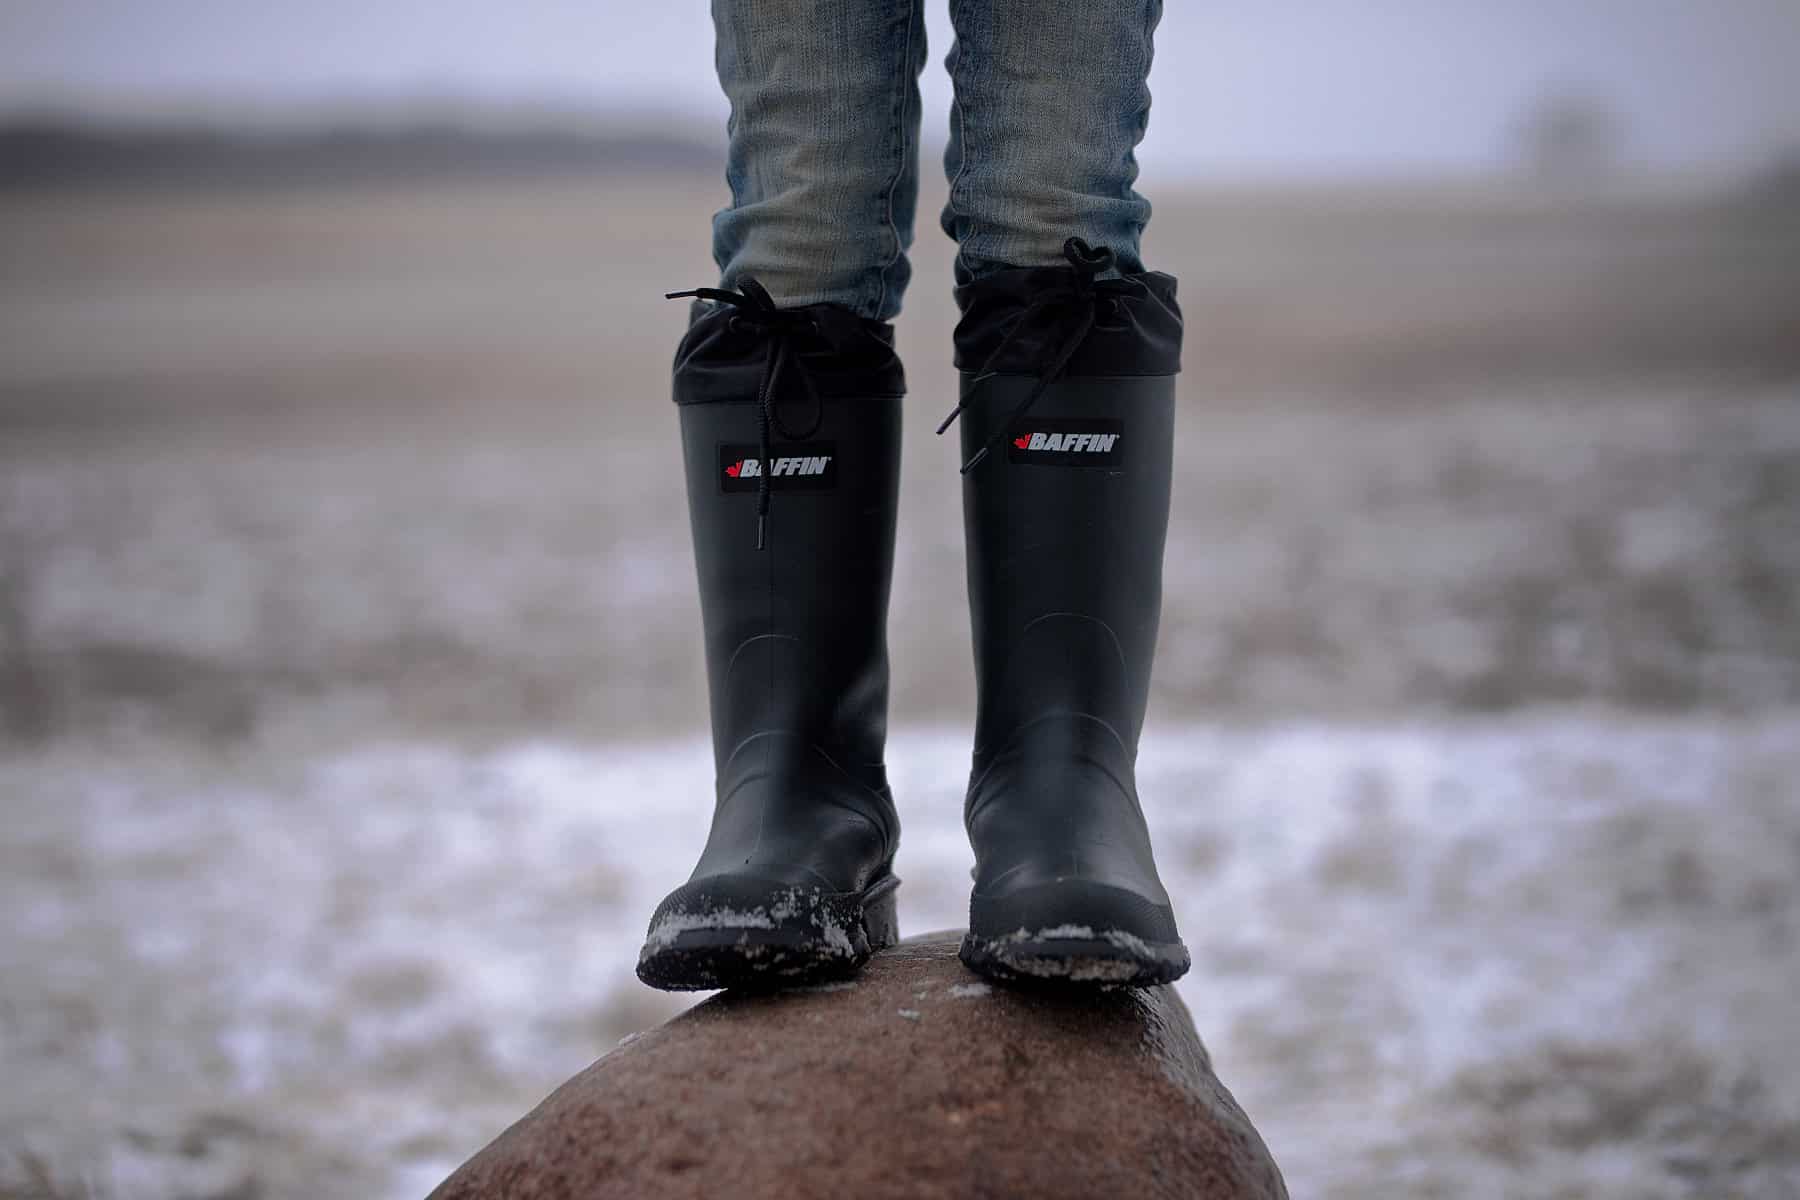 Baffin boots